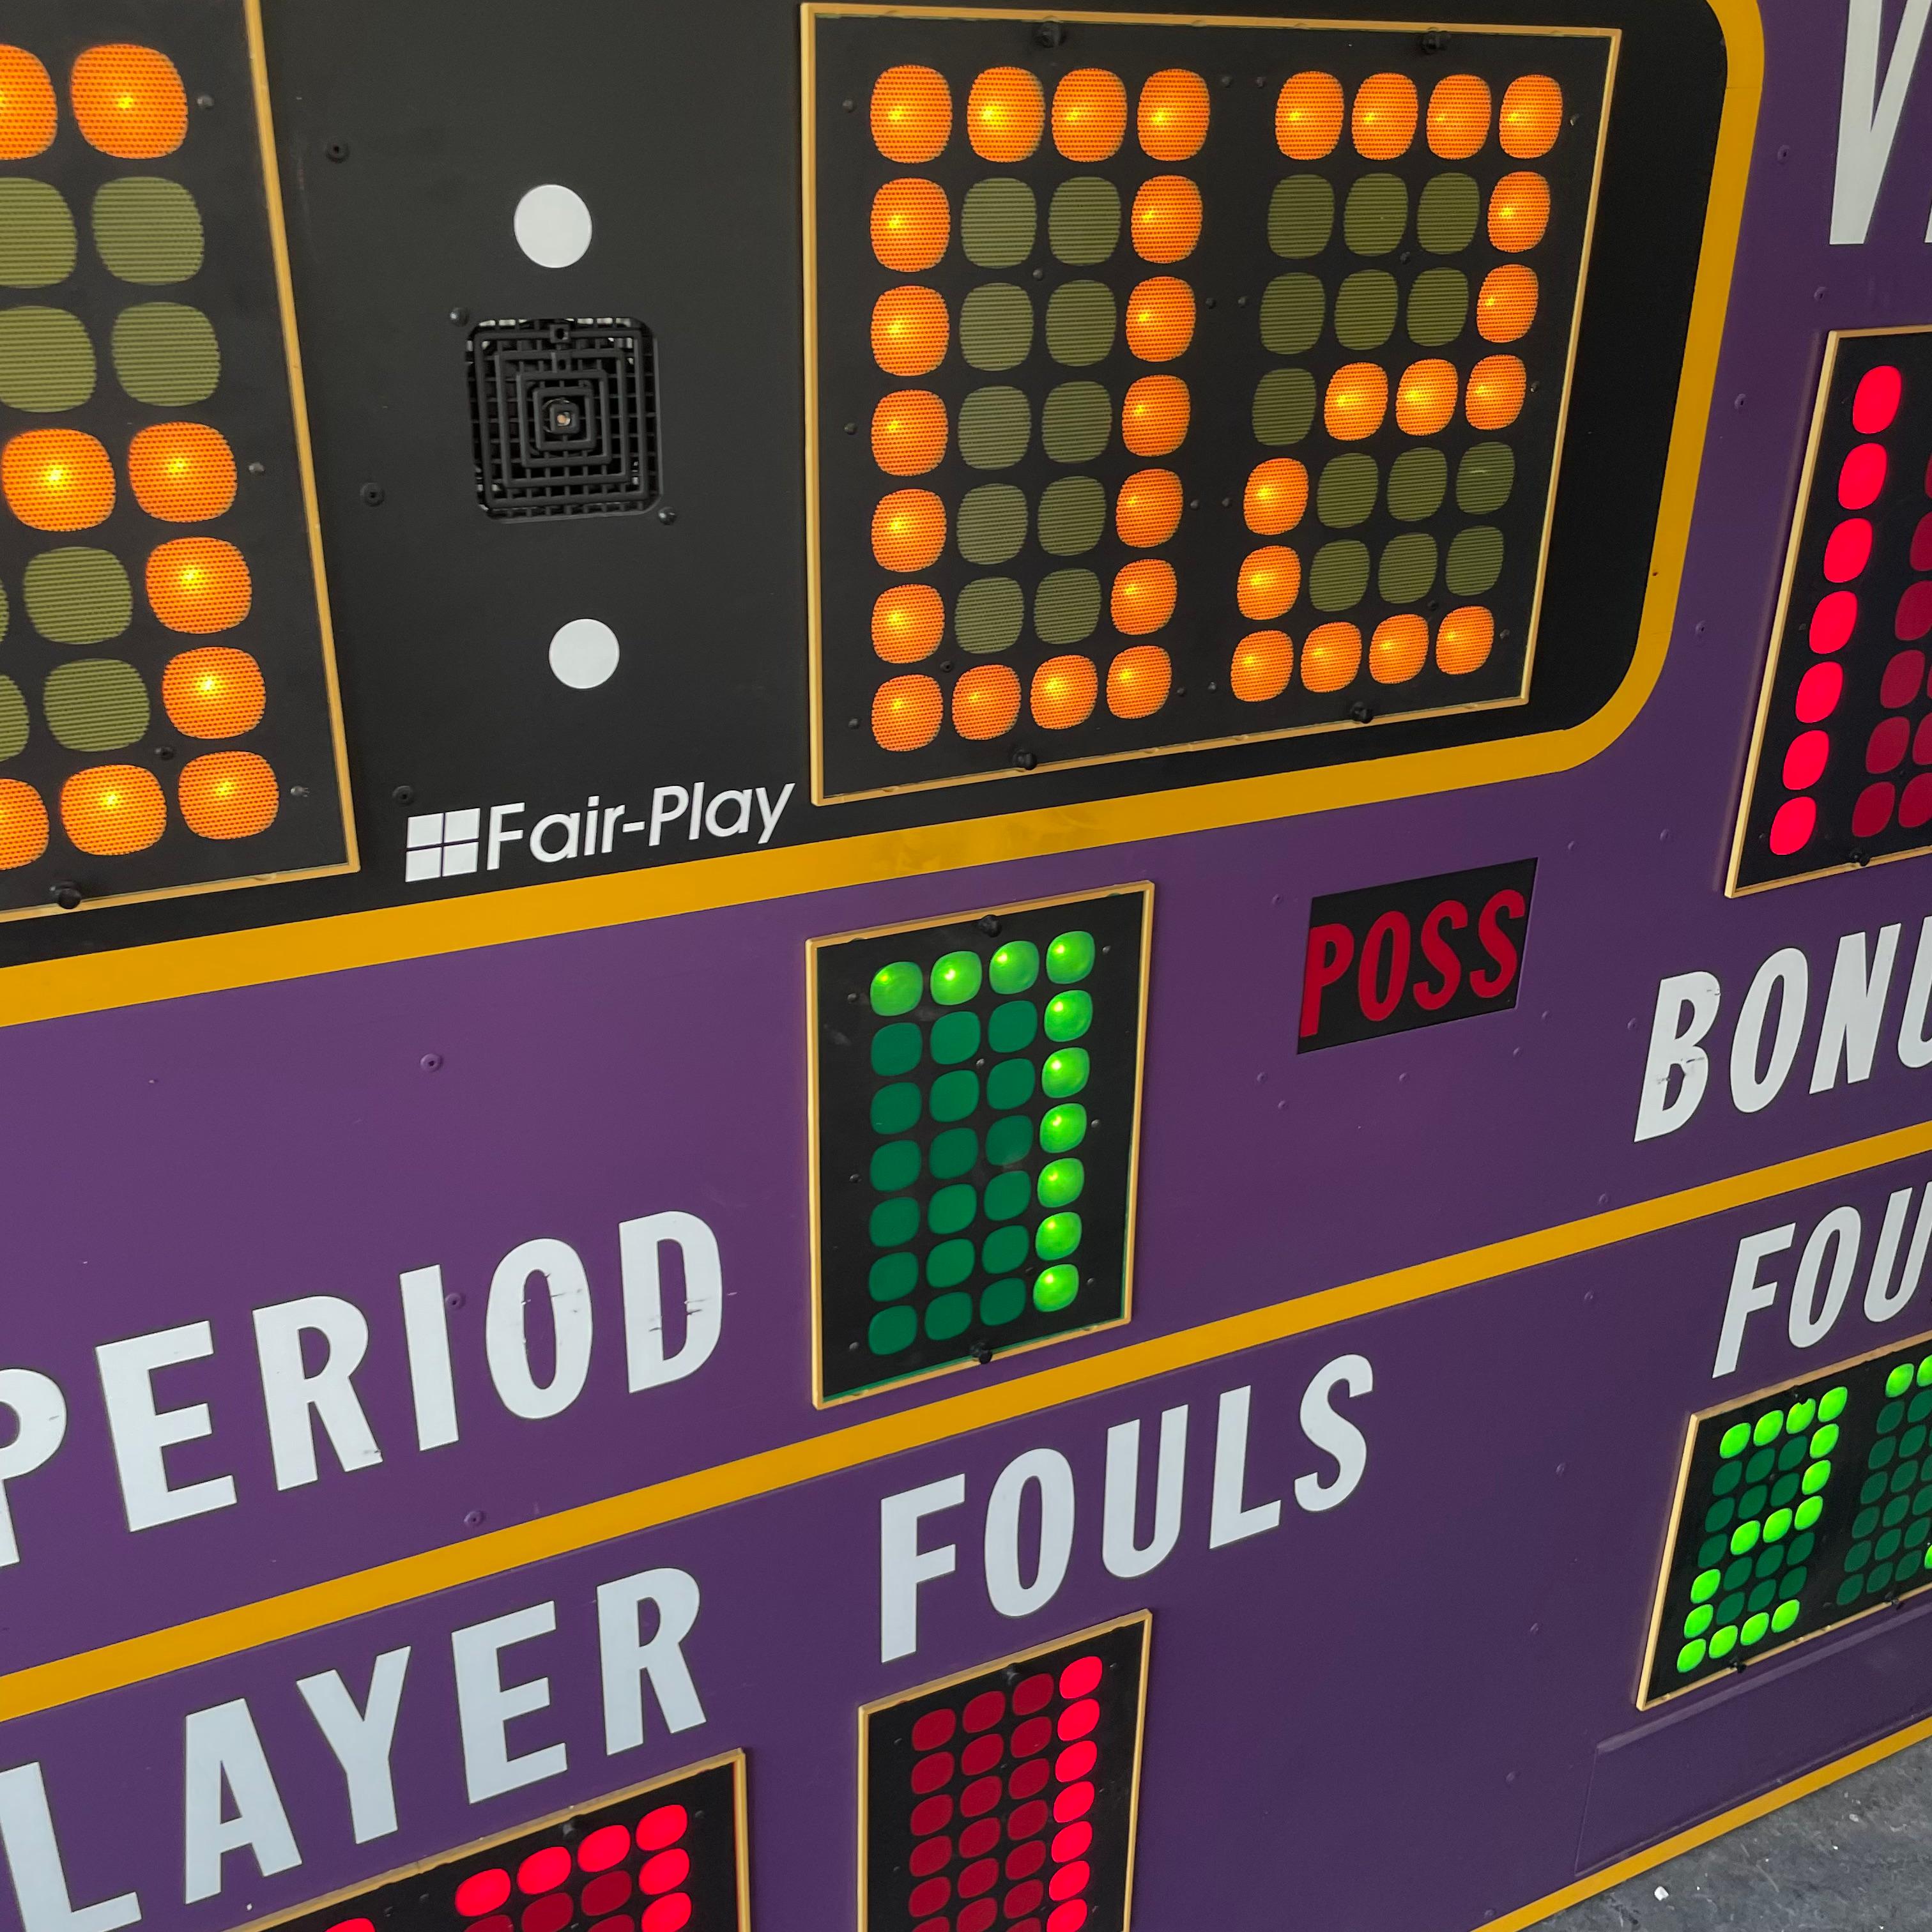 Lakers Practice Facility Basketball Scoreboard 2